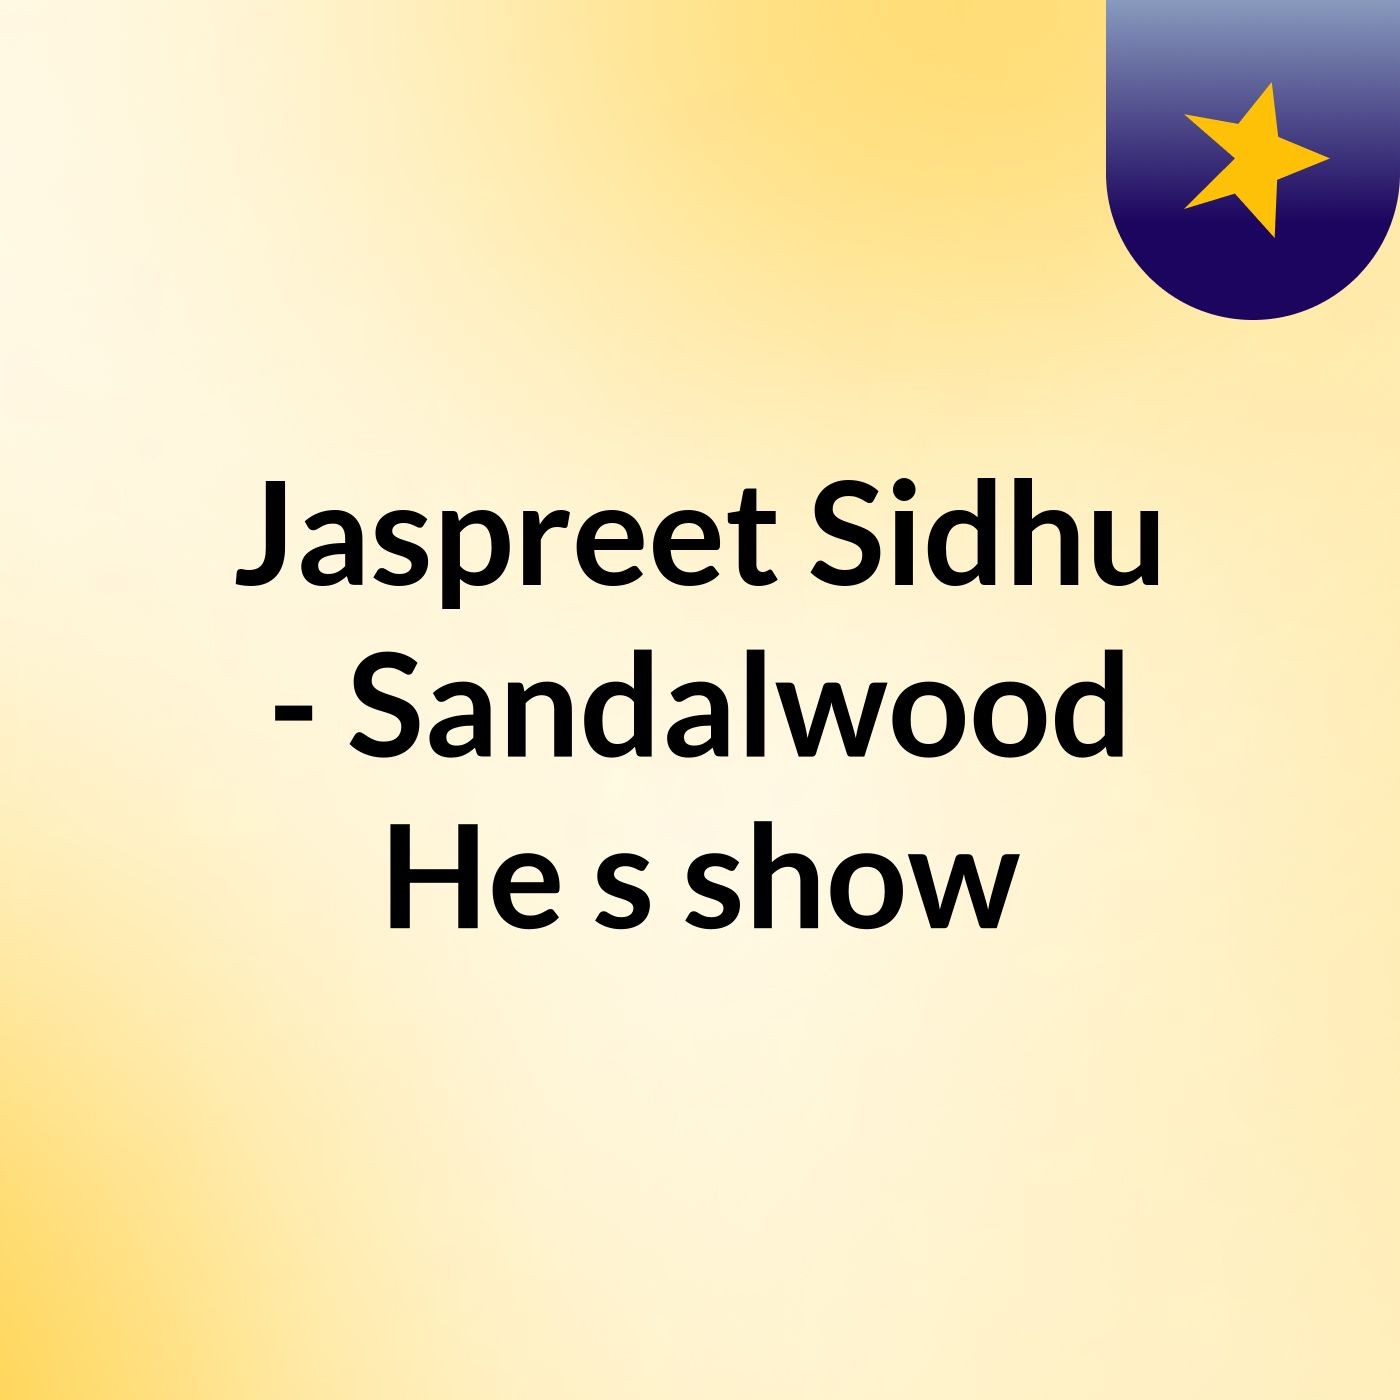 Jaspreet Sidhu - Sandalwood He's show